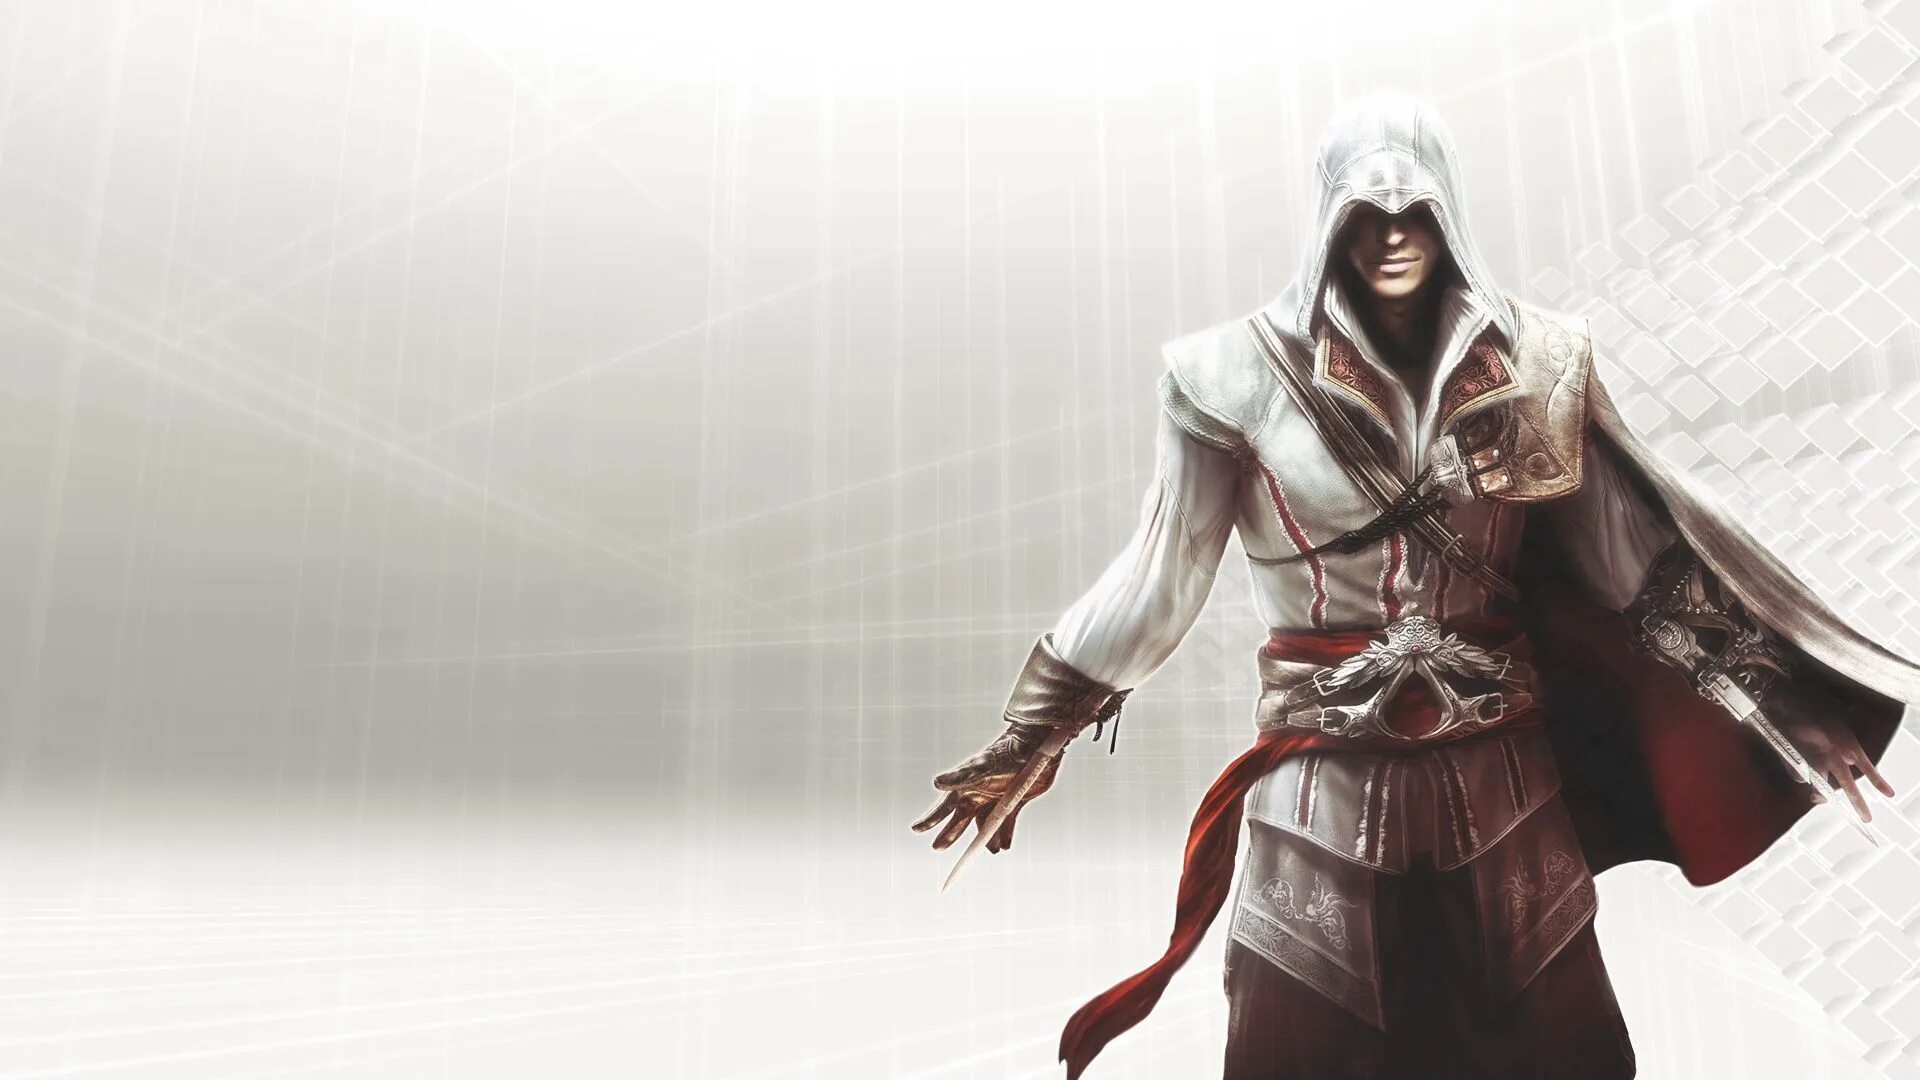 Ezio s family. Ассасин Крид 2 Эцио. Сестра Эцио. Jesper Kyd Assassin's Creed 2. Фон ассасин Крид 2.